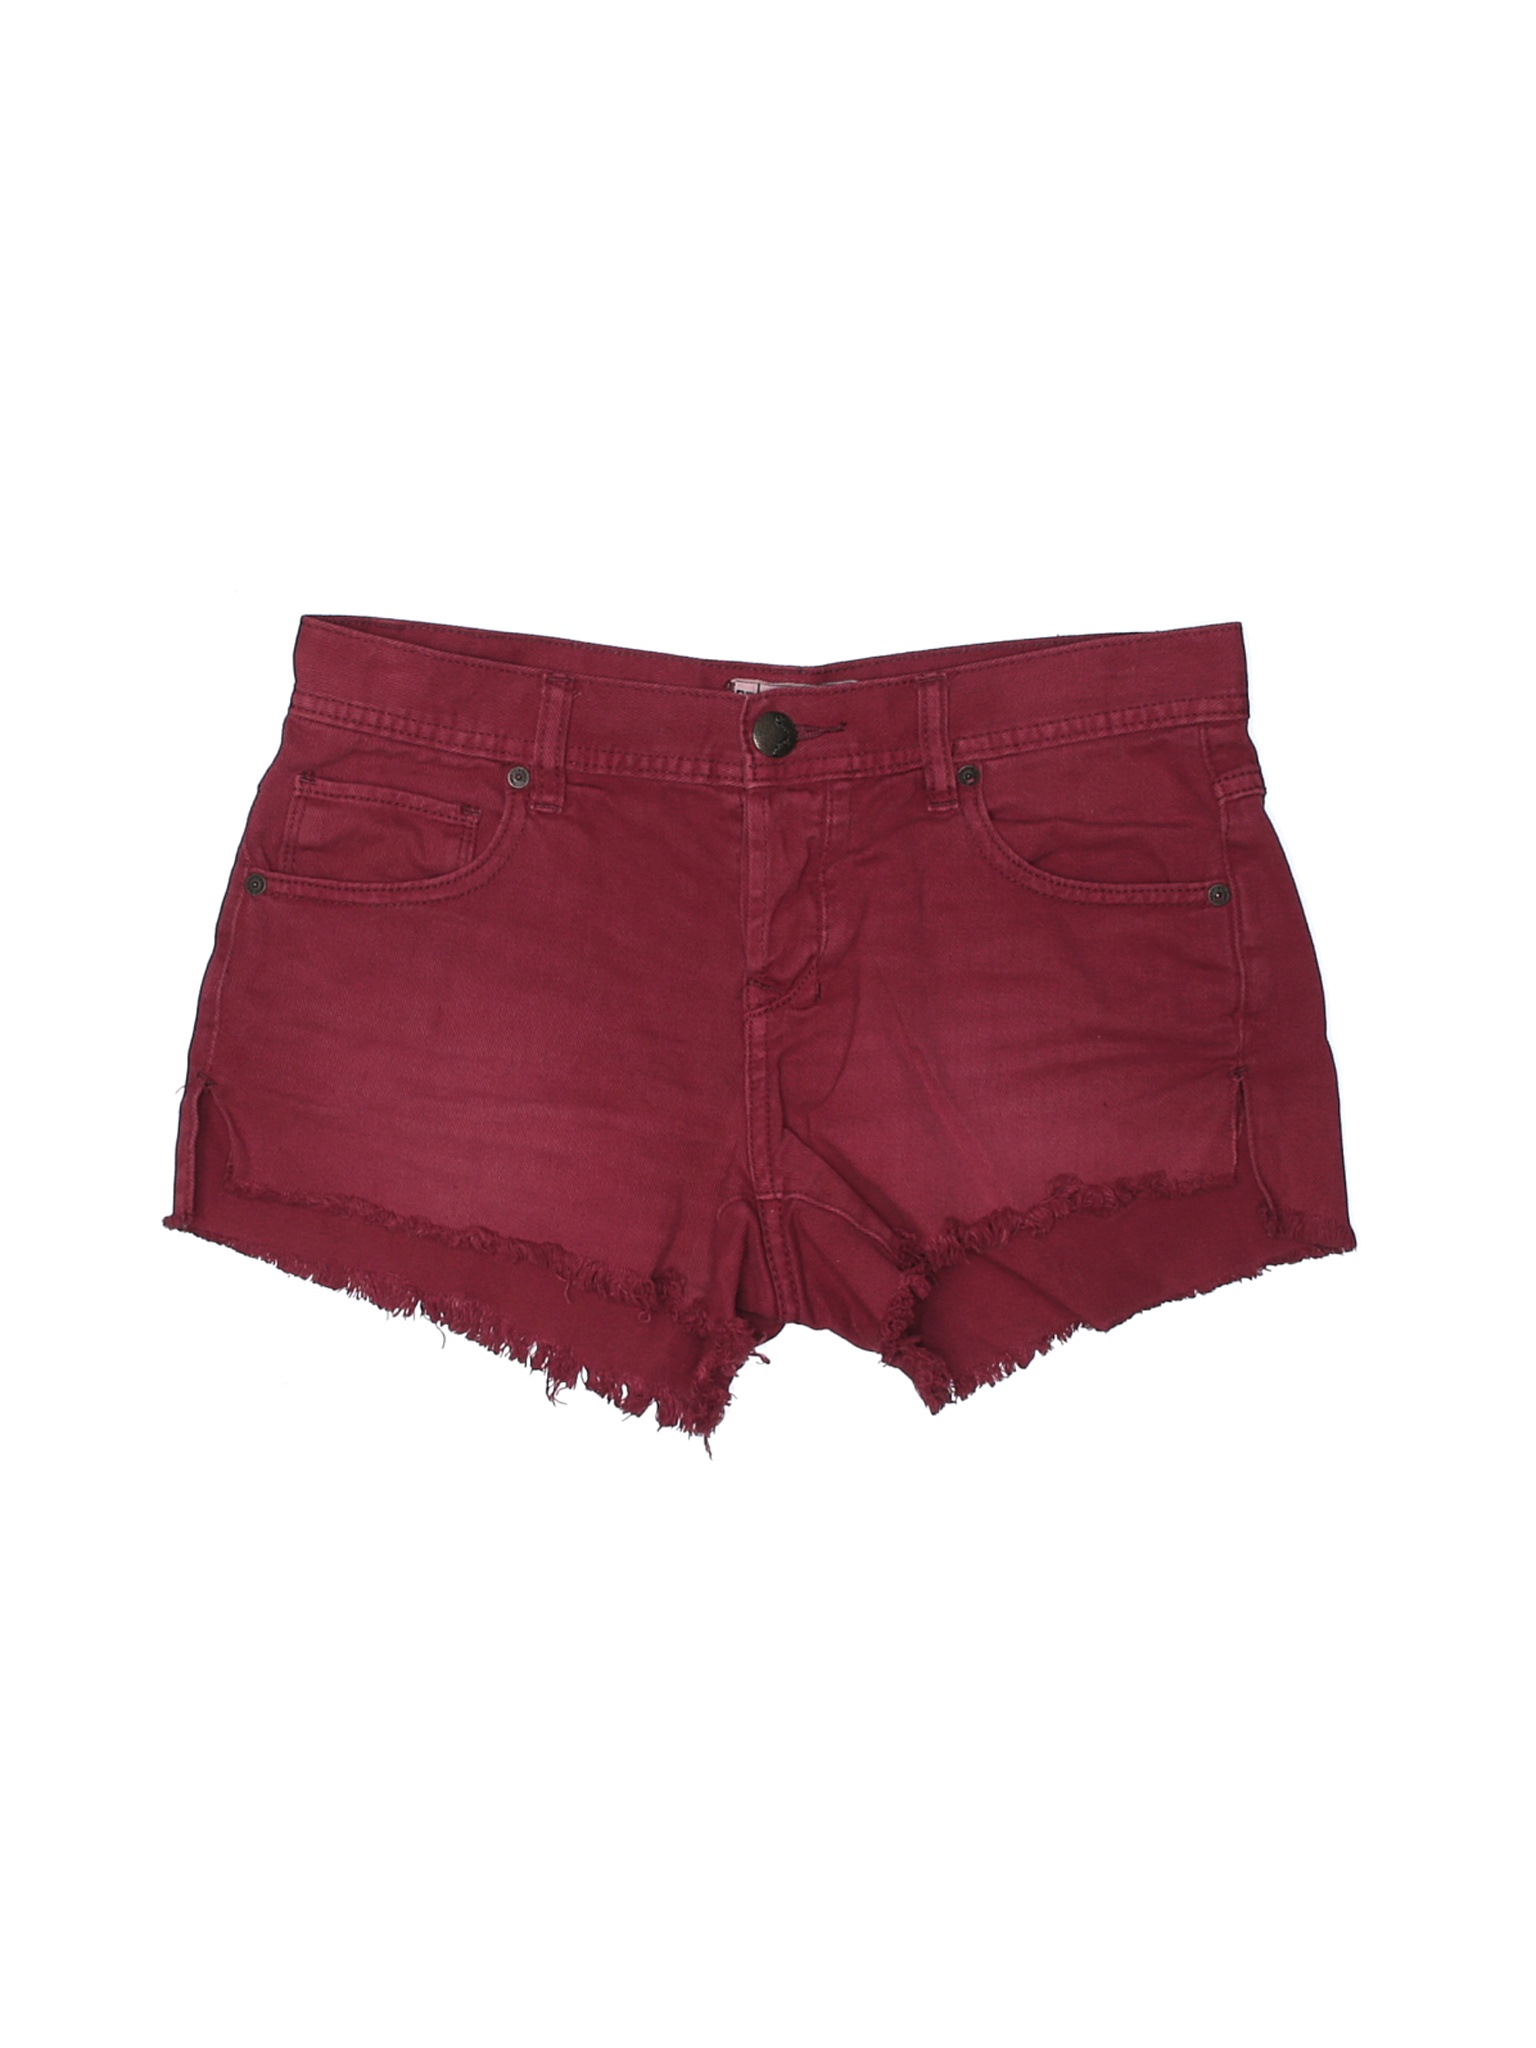 Free People Women Red Denim Shorts 26W | eBay